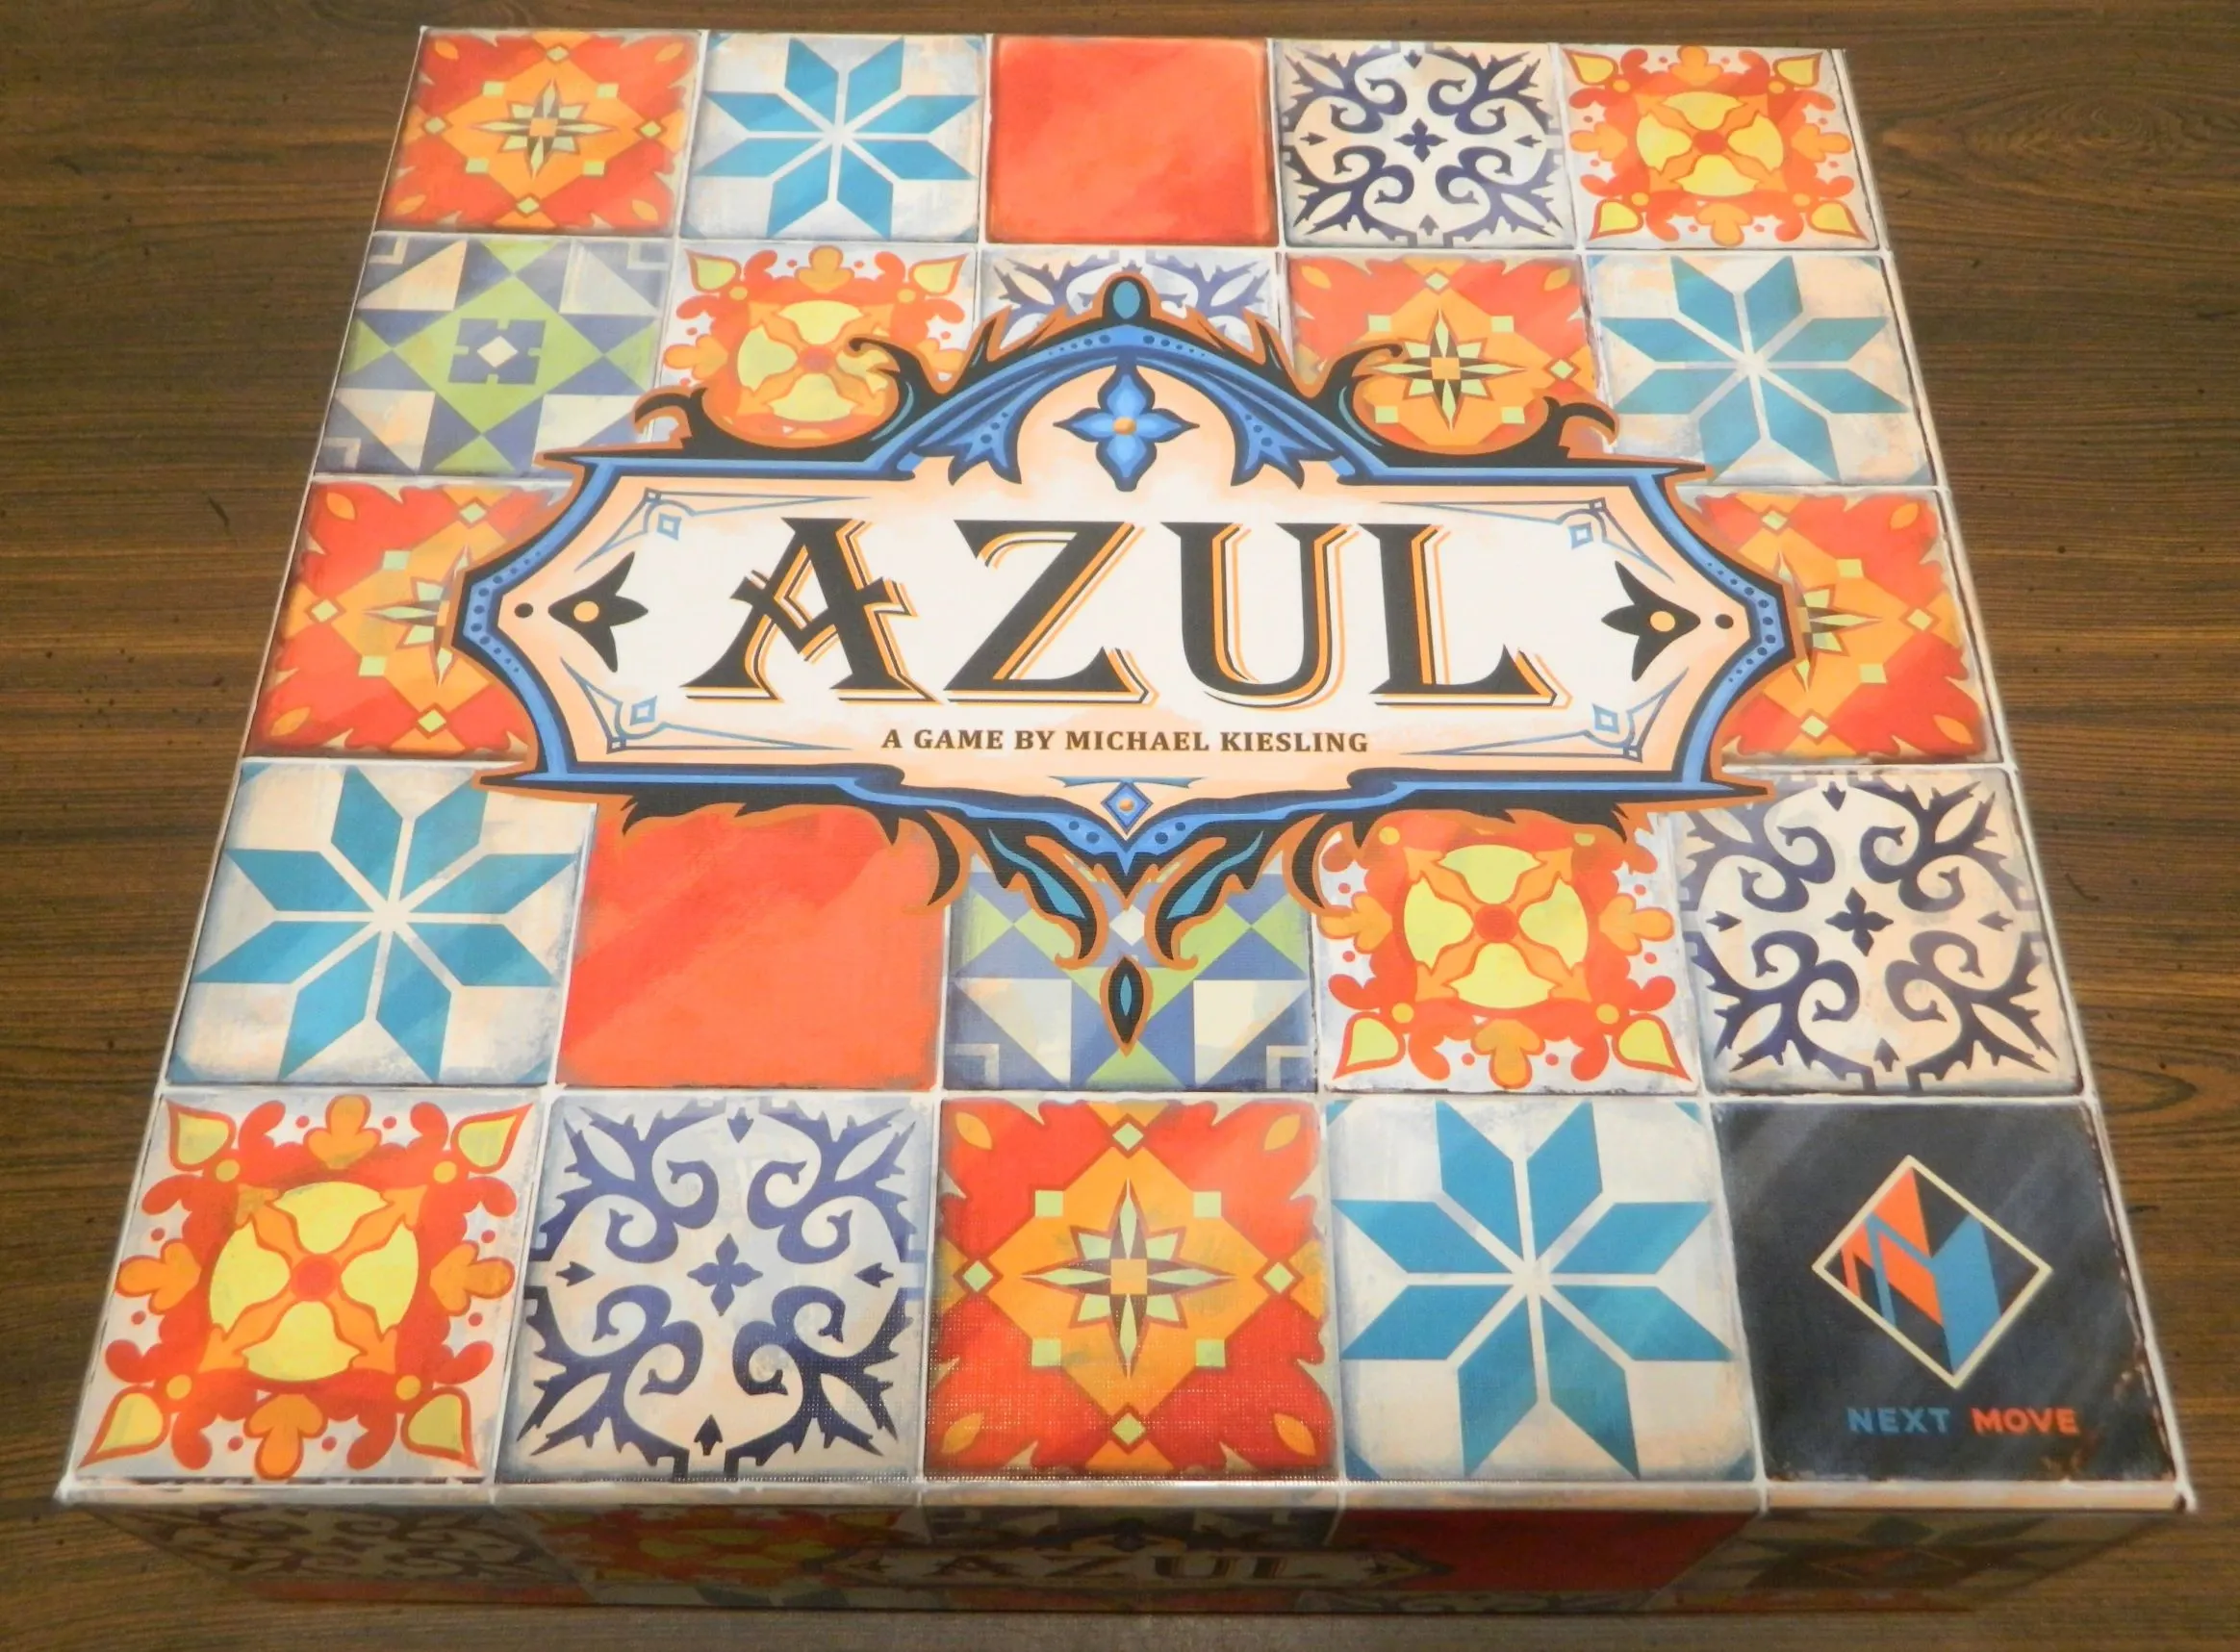 Box for Azul